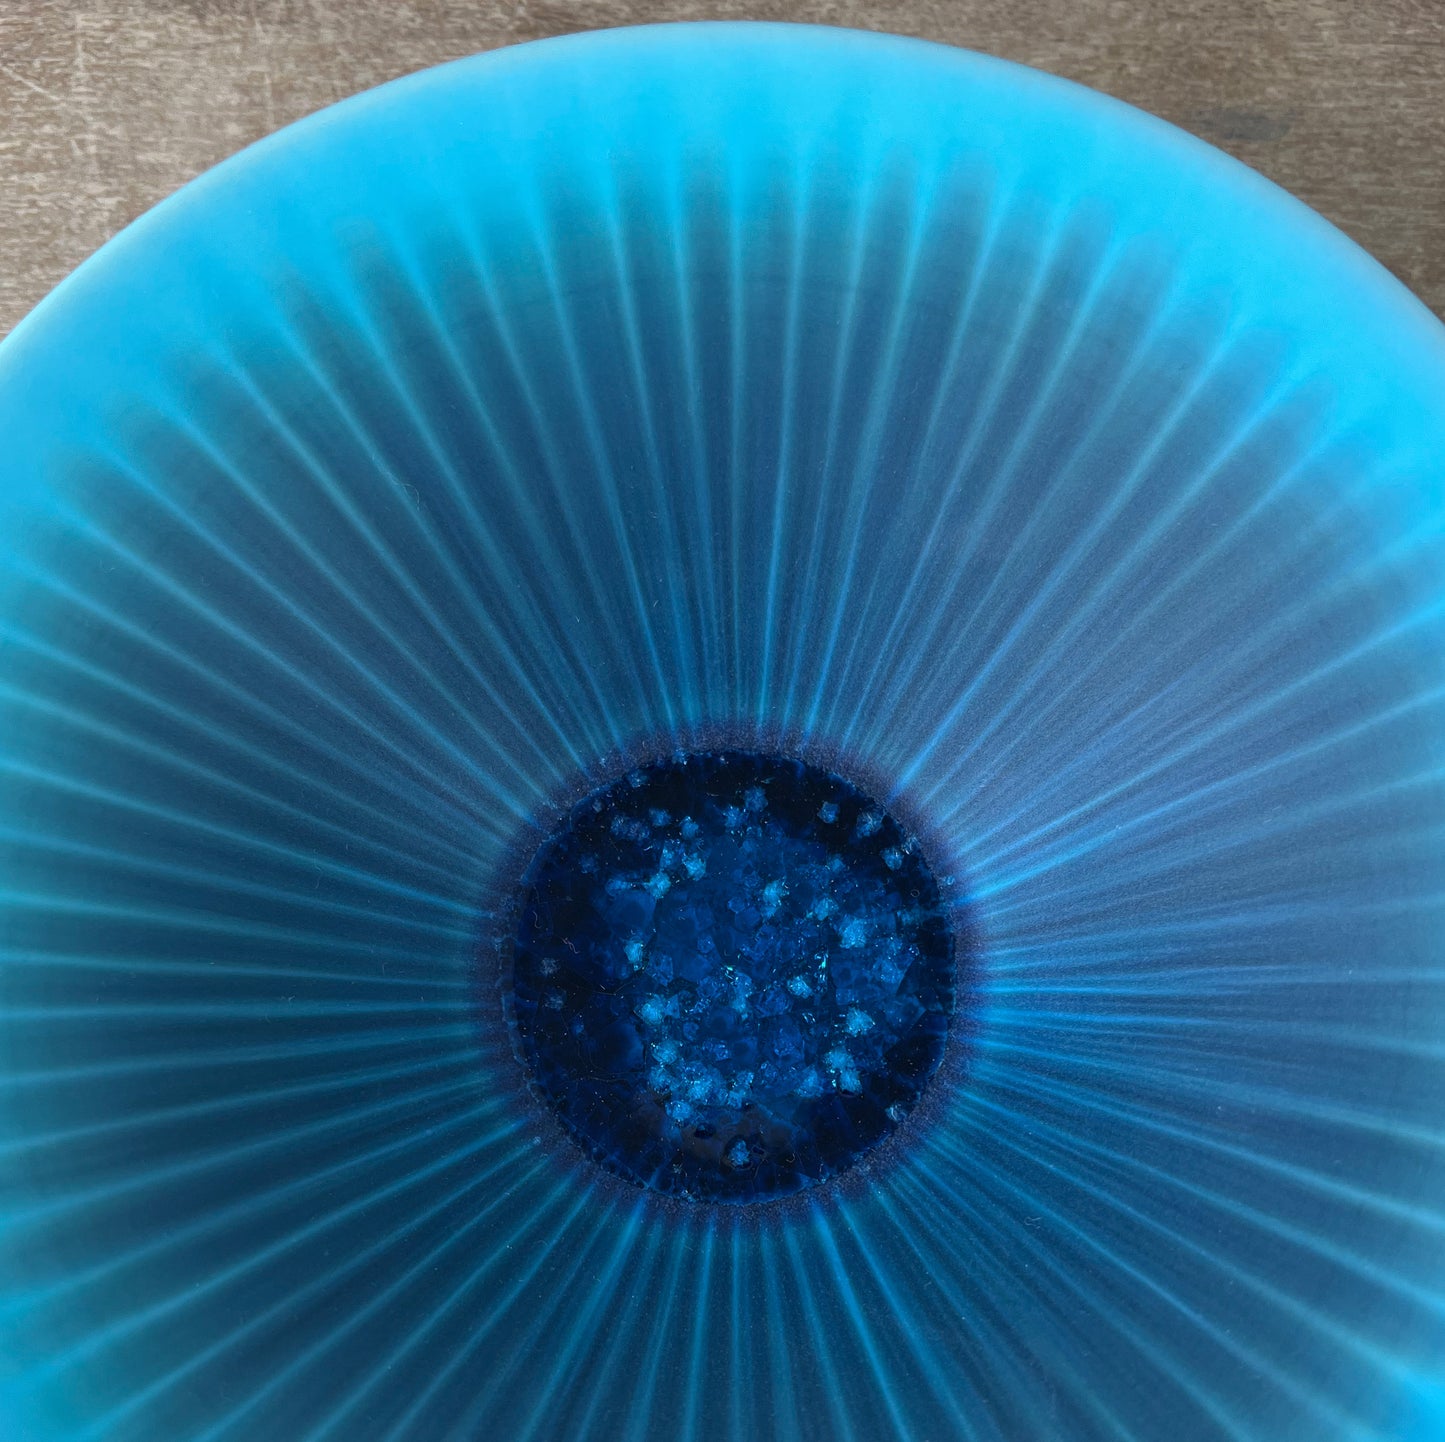 Asagao Bowl 7”, Indigo Wash Turkish Blue